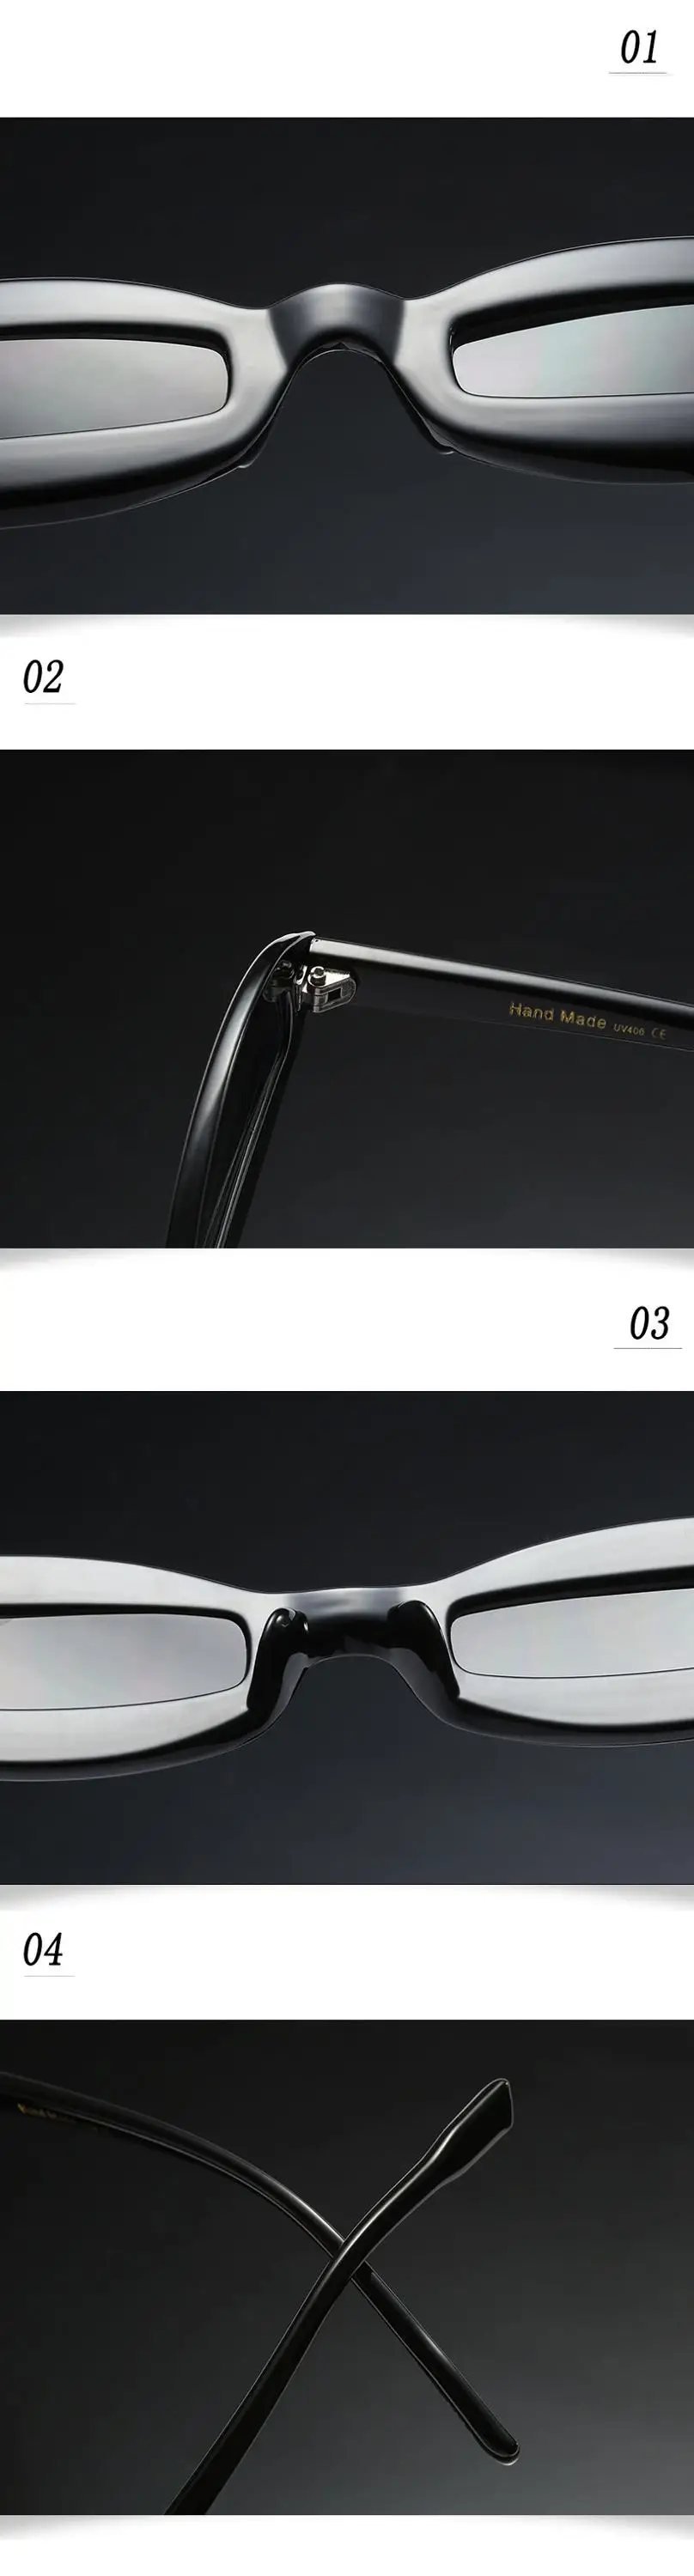 Trendy Designer Authentic Oval Frame Rectangular Lens  Oculos Lady Sunglasses